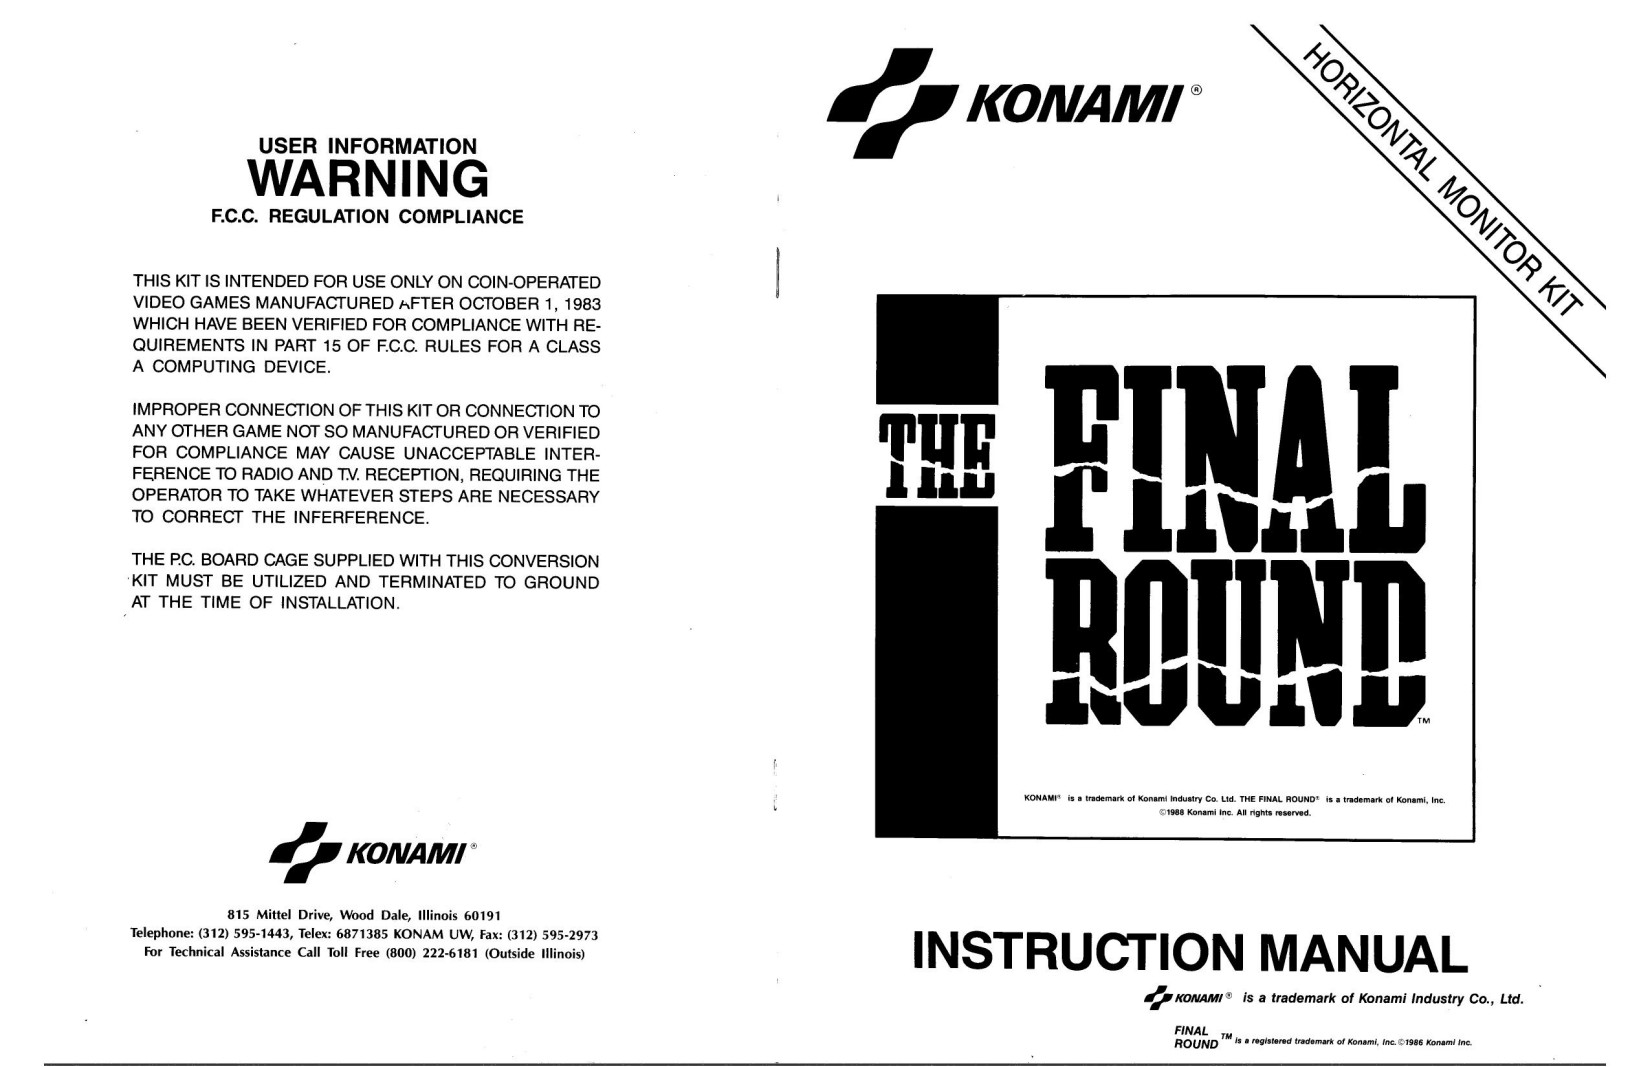 FinalRound Manual